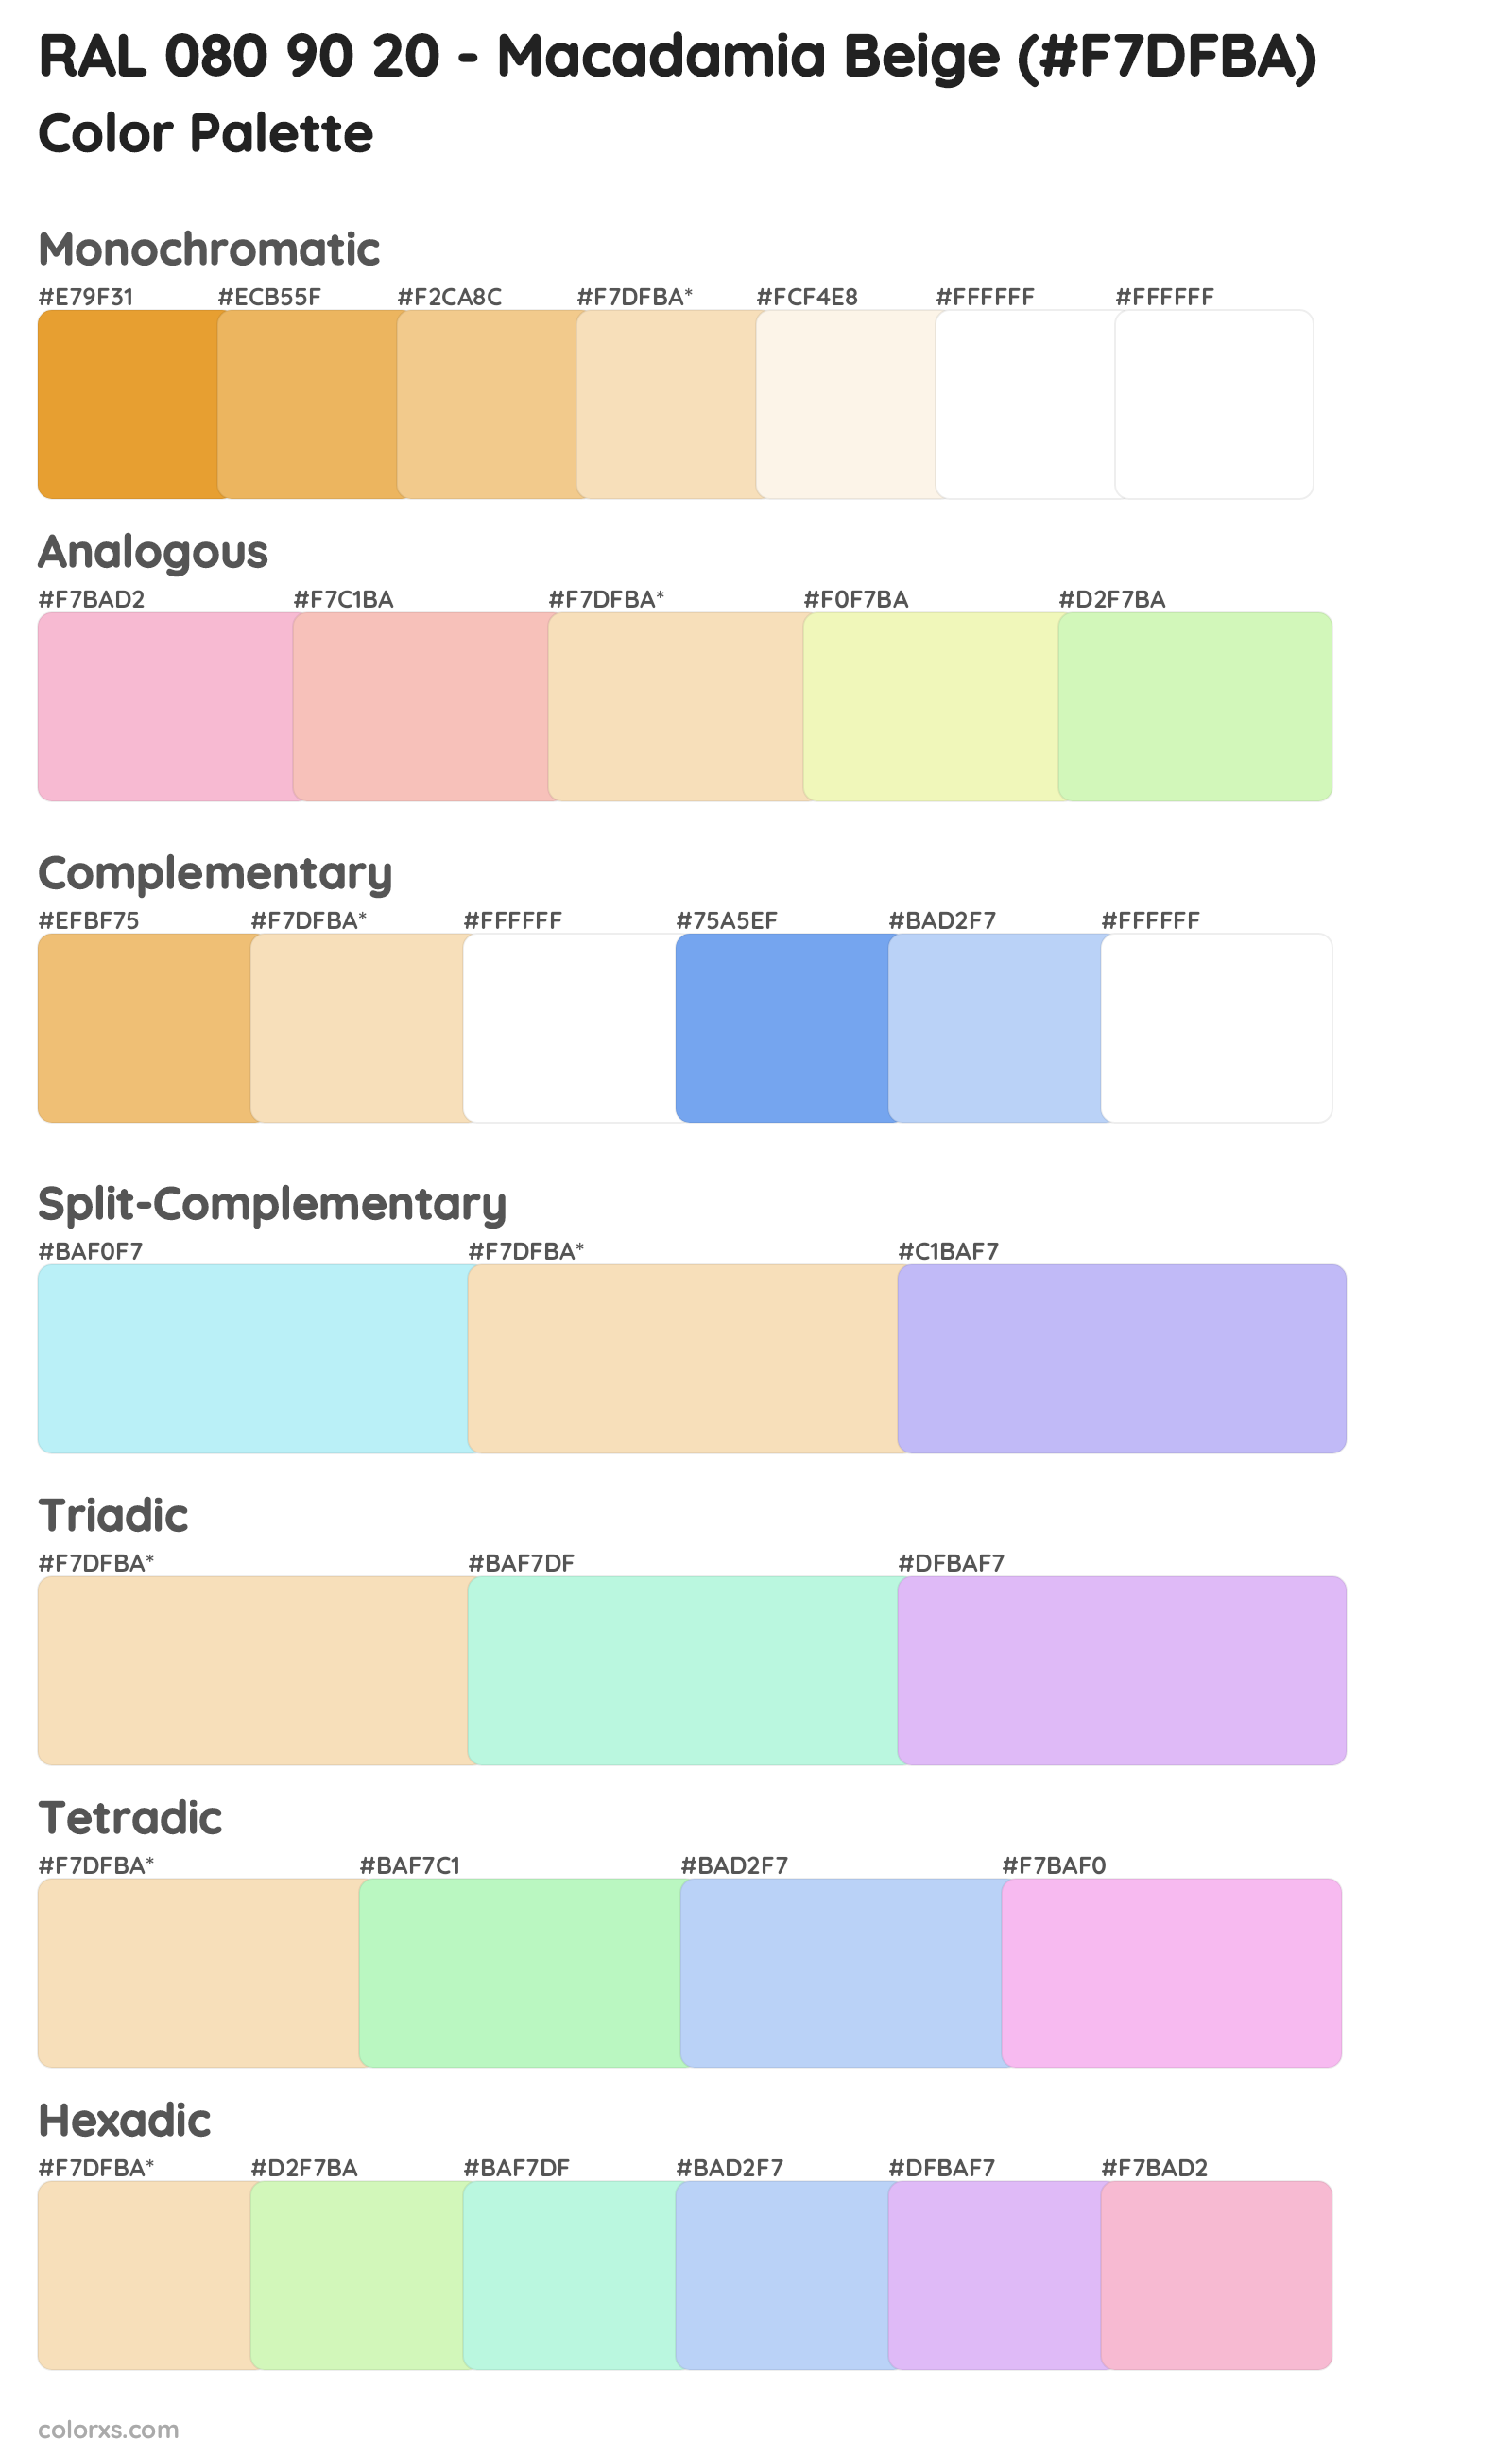 RAL 080 90 20 - Macadamia Beige Color Scheme Palettes